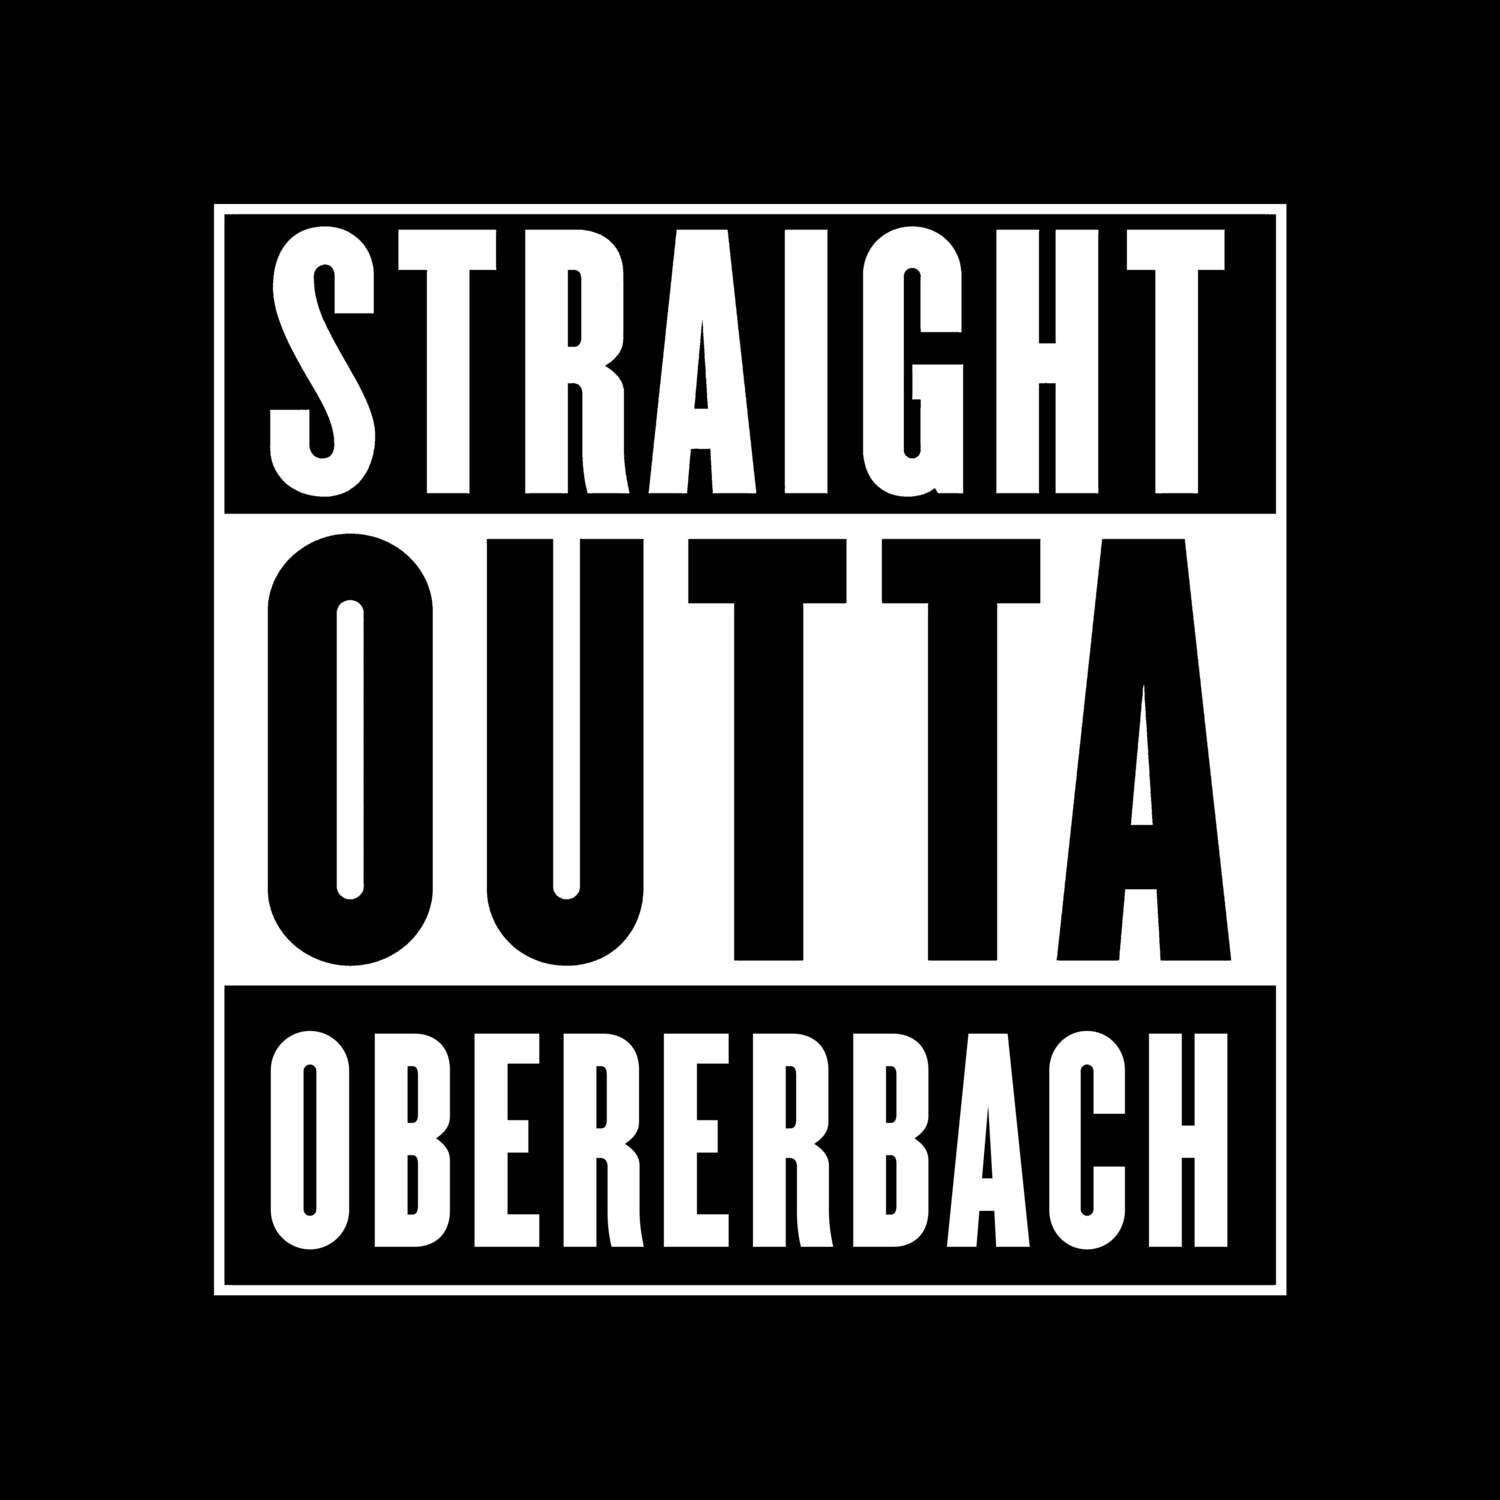 Obererbach T-Shirt »Straight Outta«